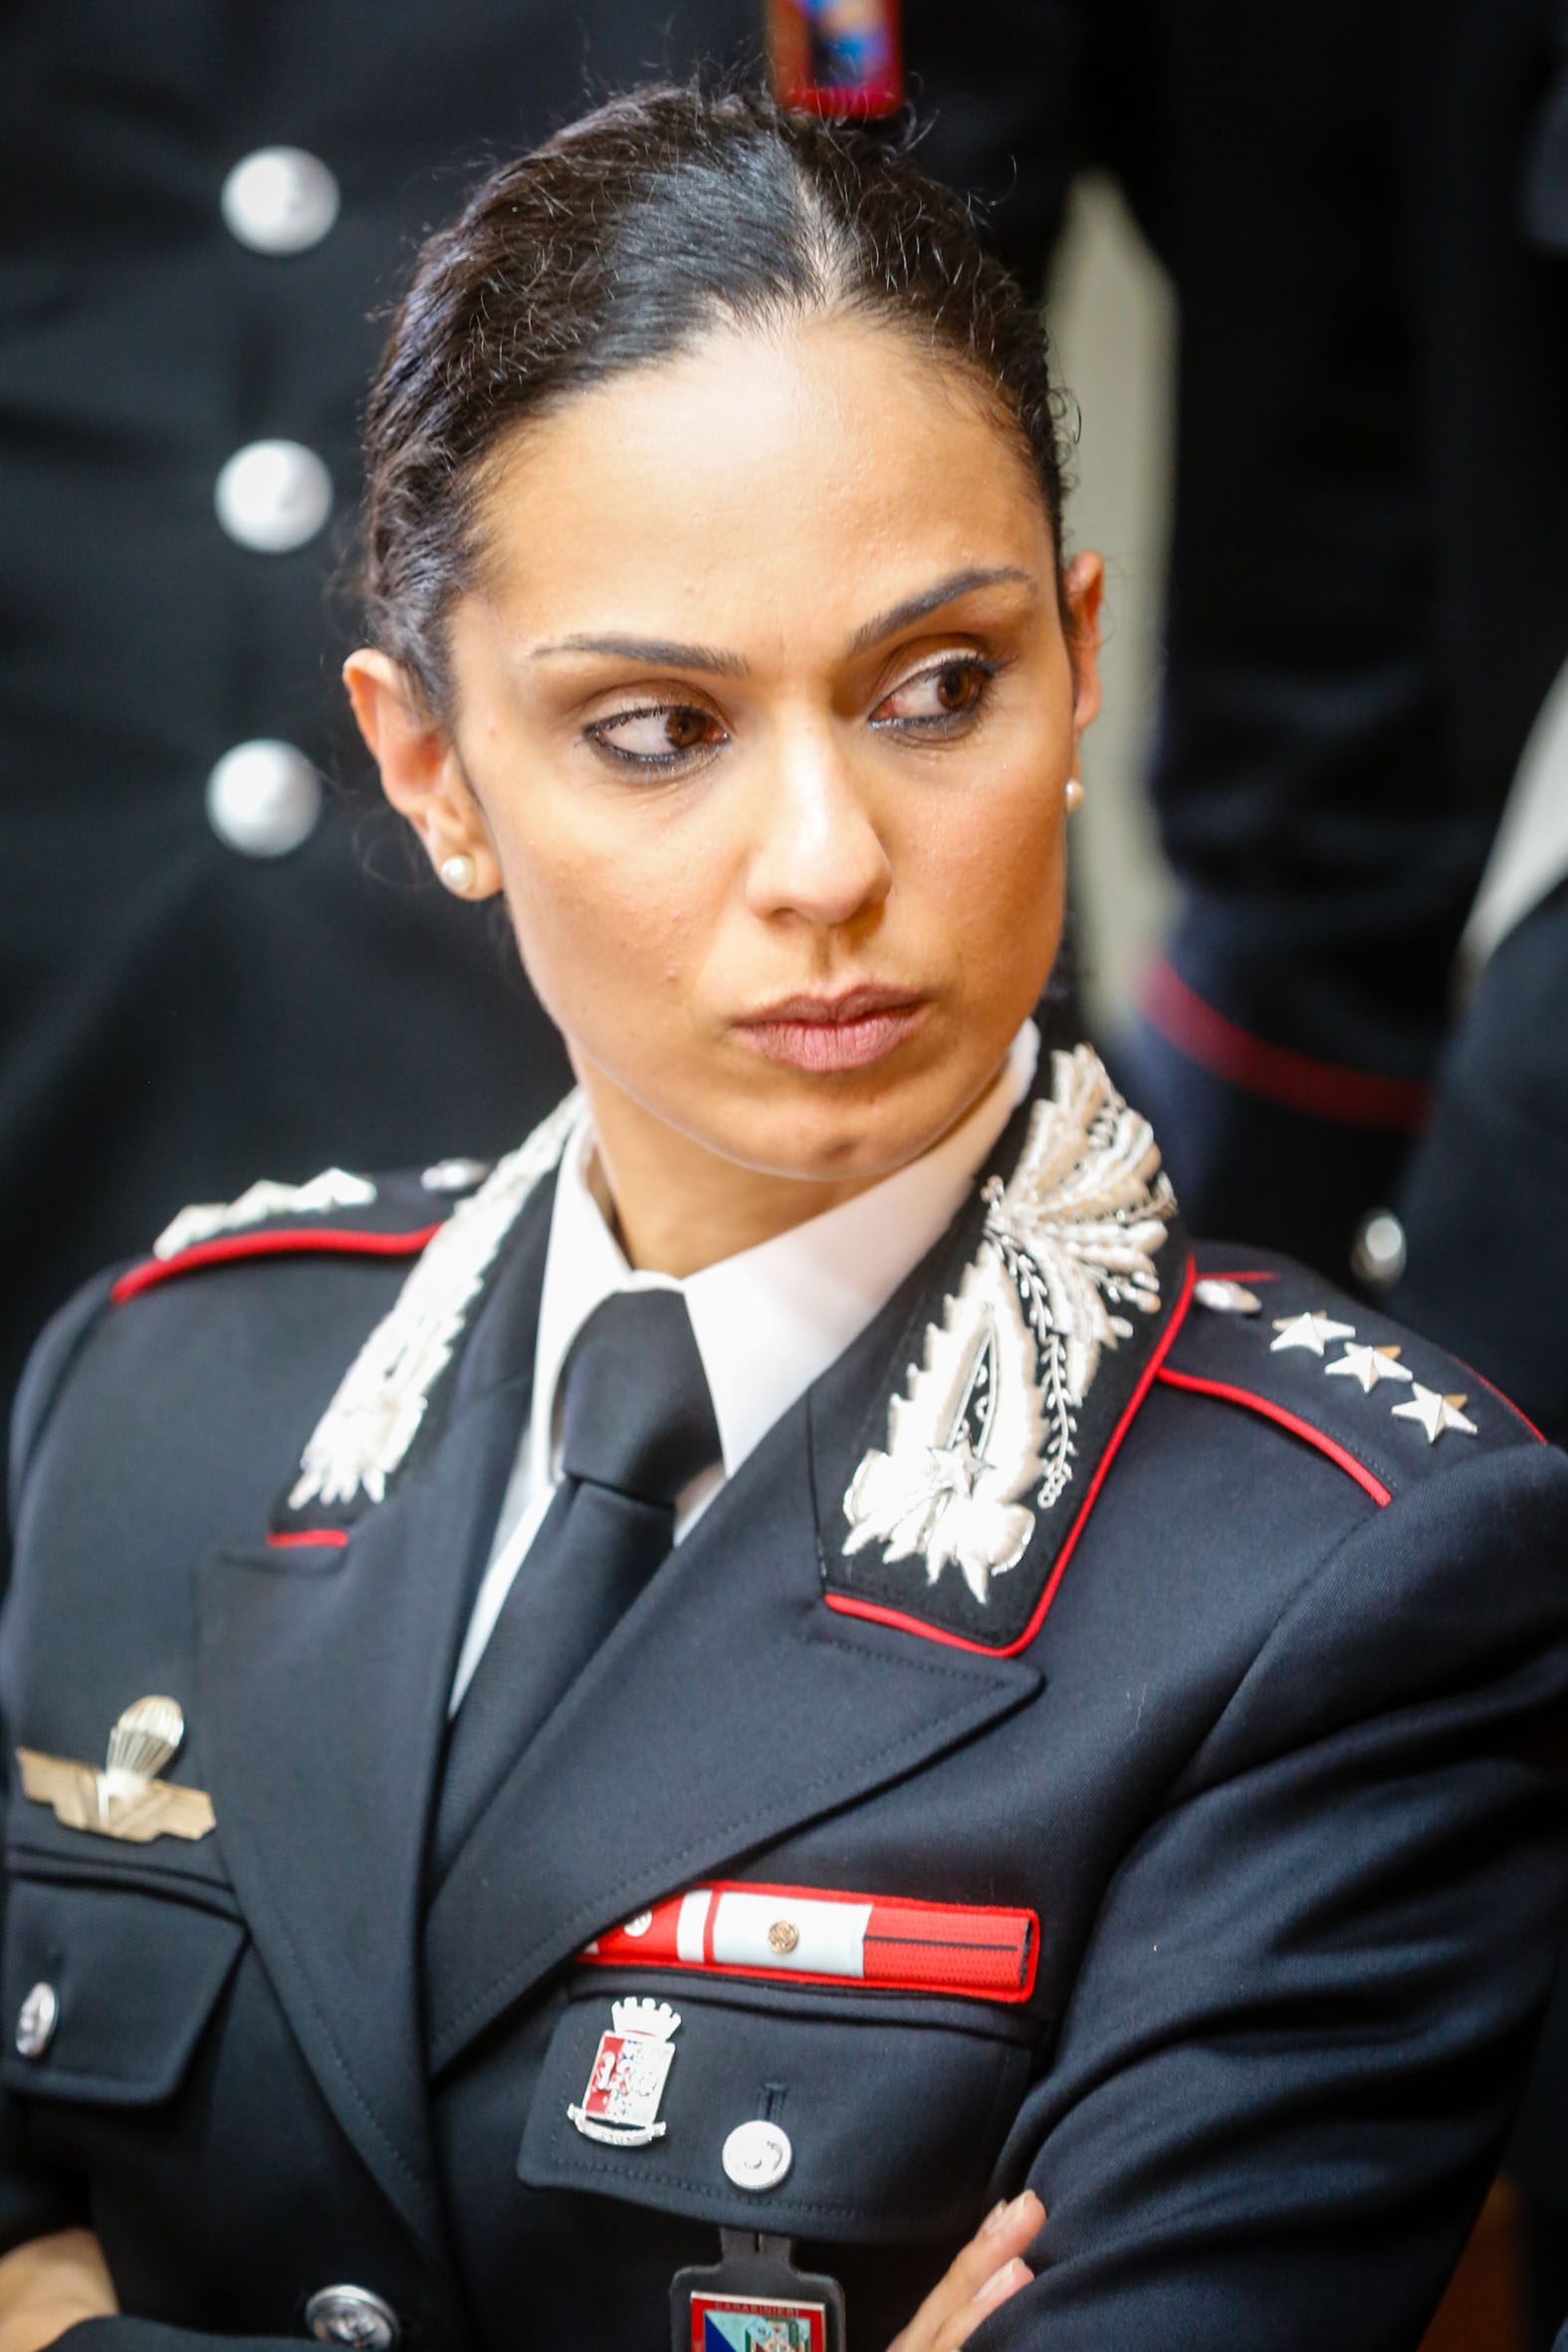 Italian Police Uniform Capitano-Anzini